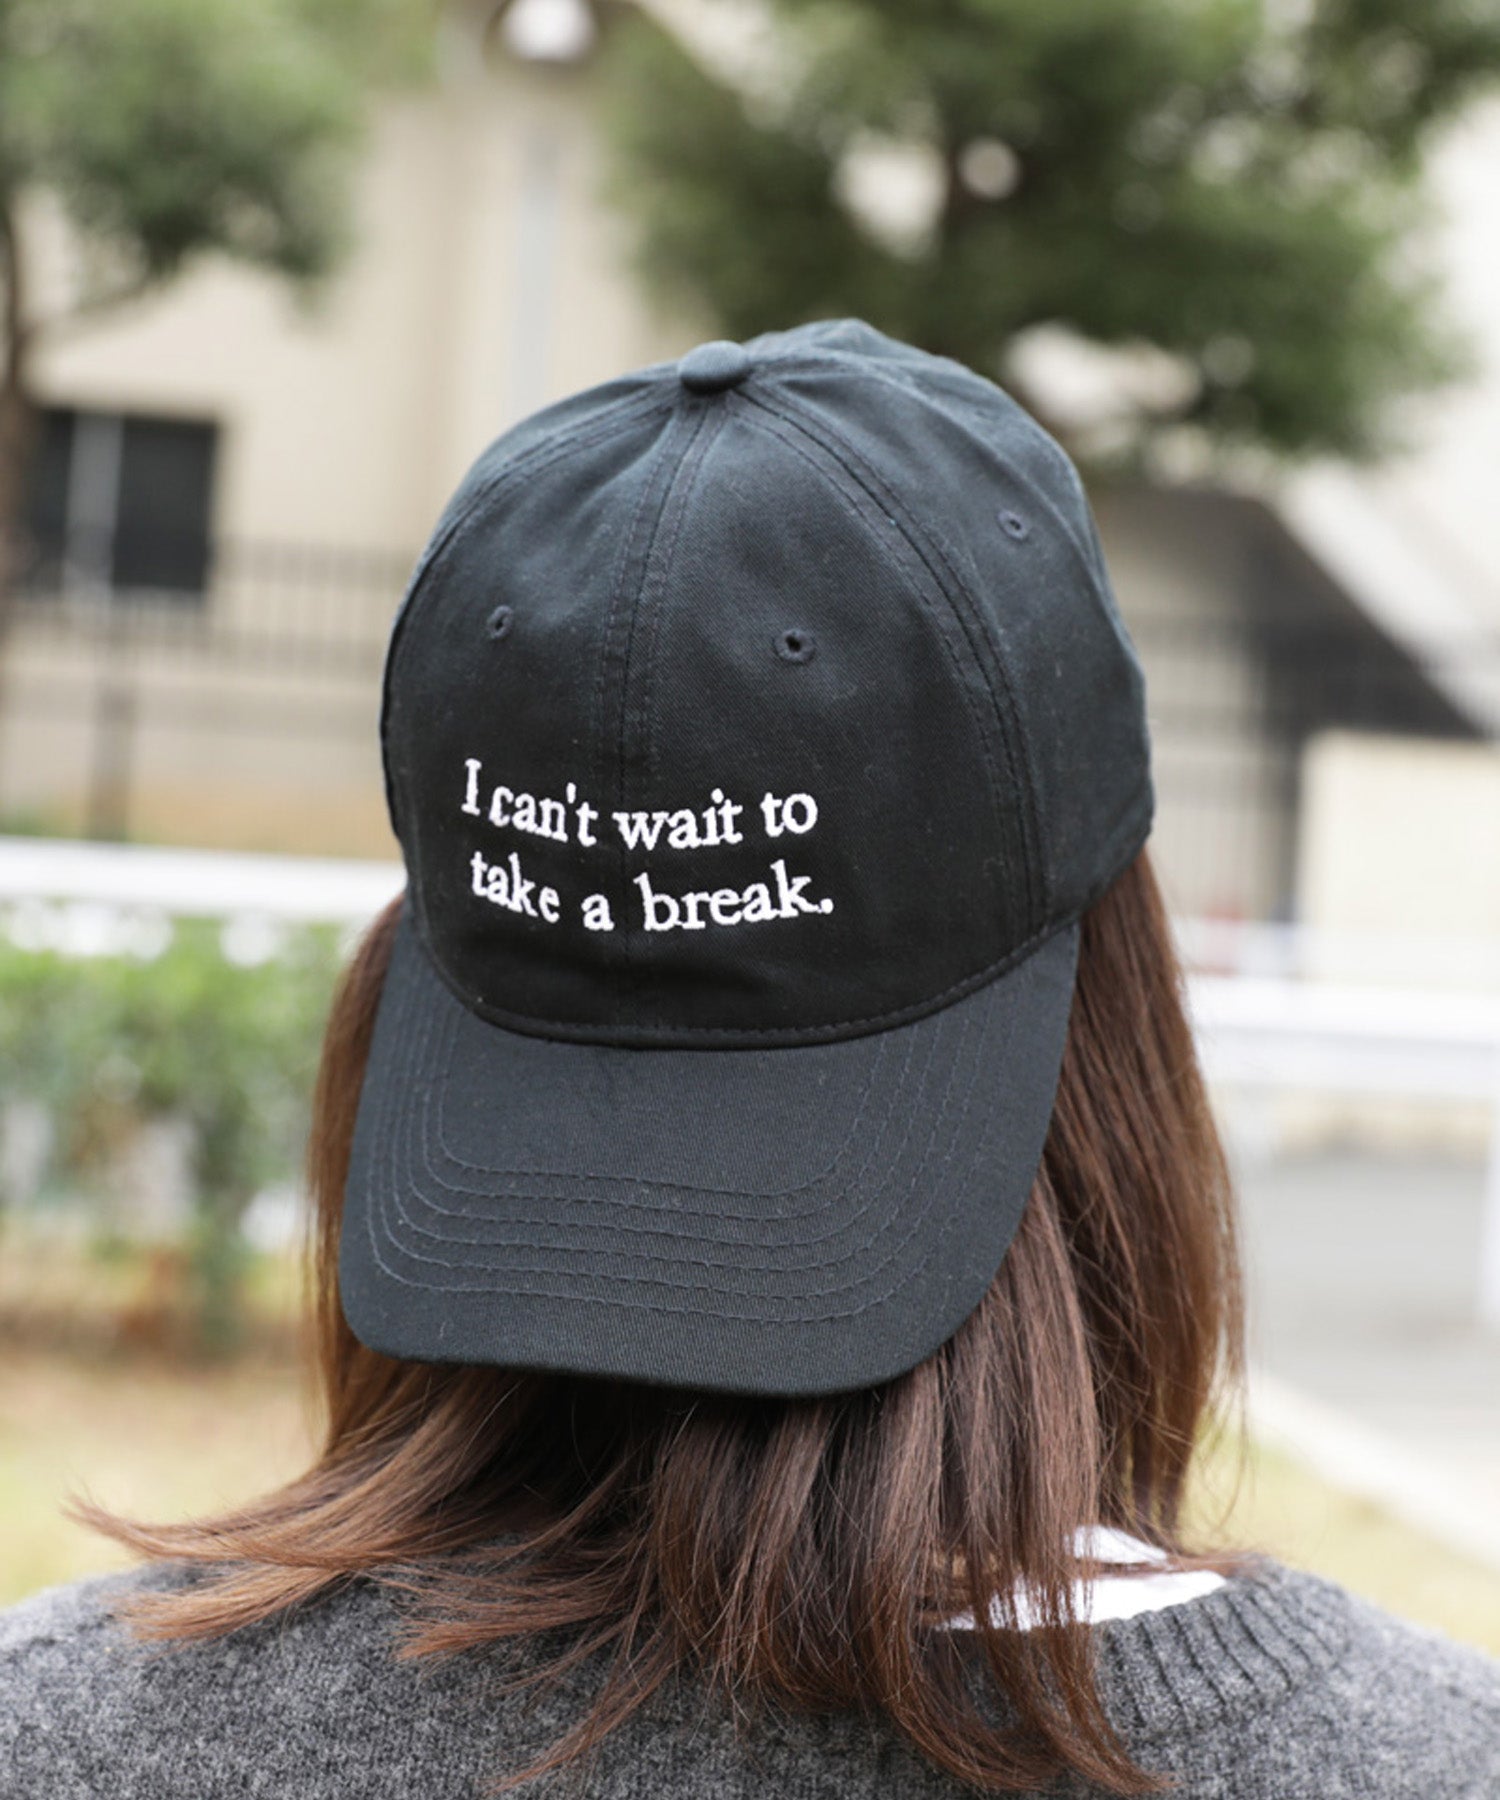 Take a break Cap